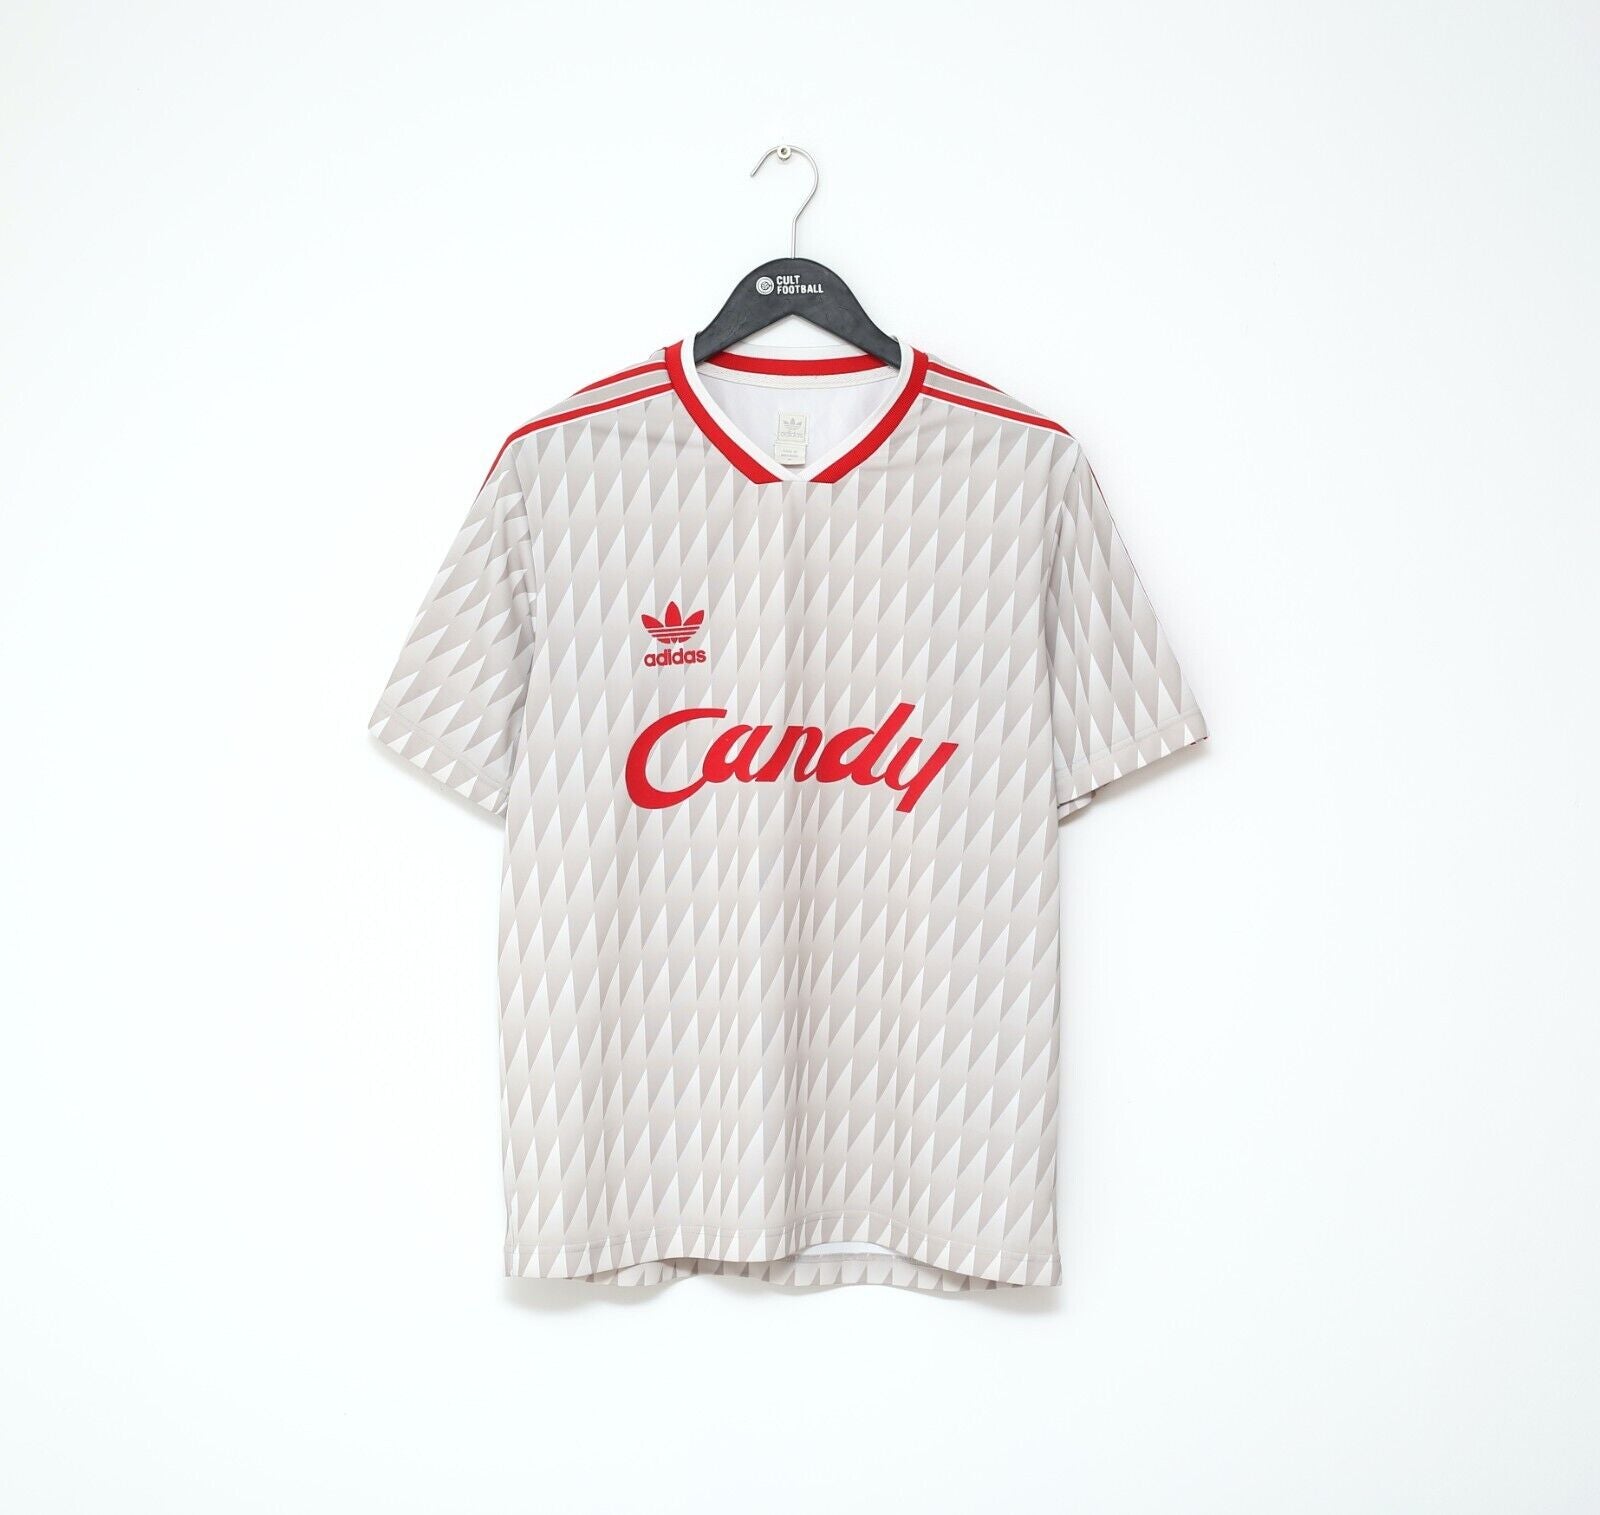 Liverpool FC vintage original Adidas Candy soccer jersey 20385